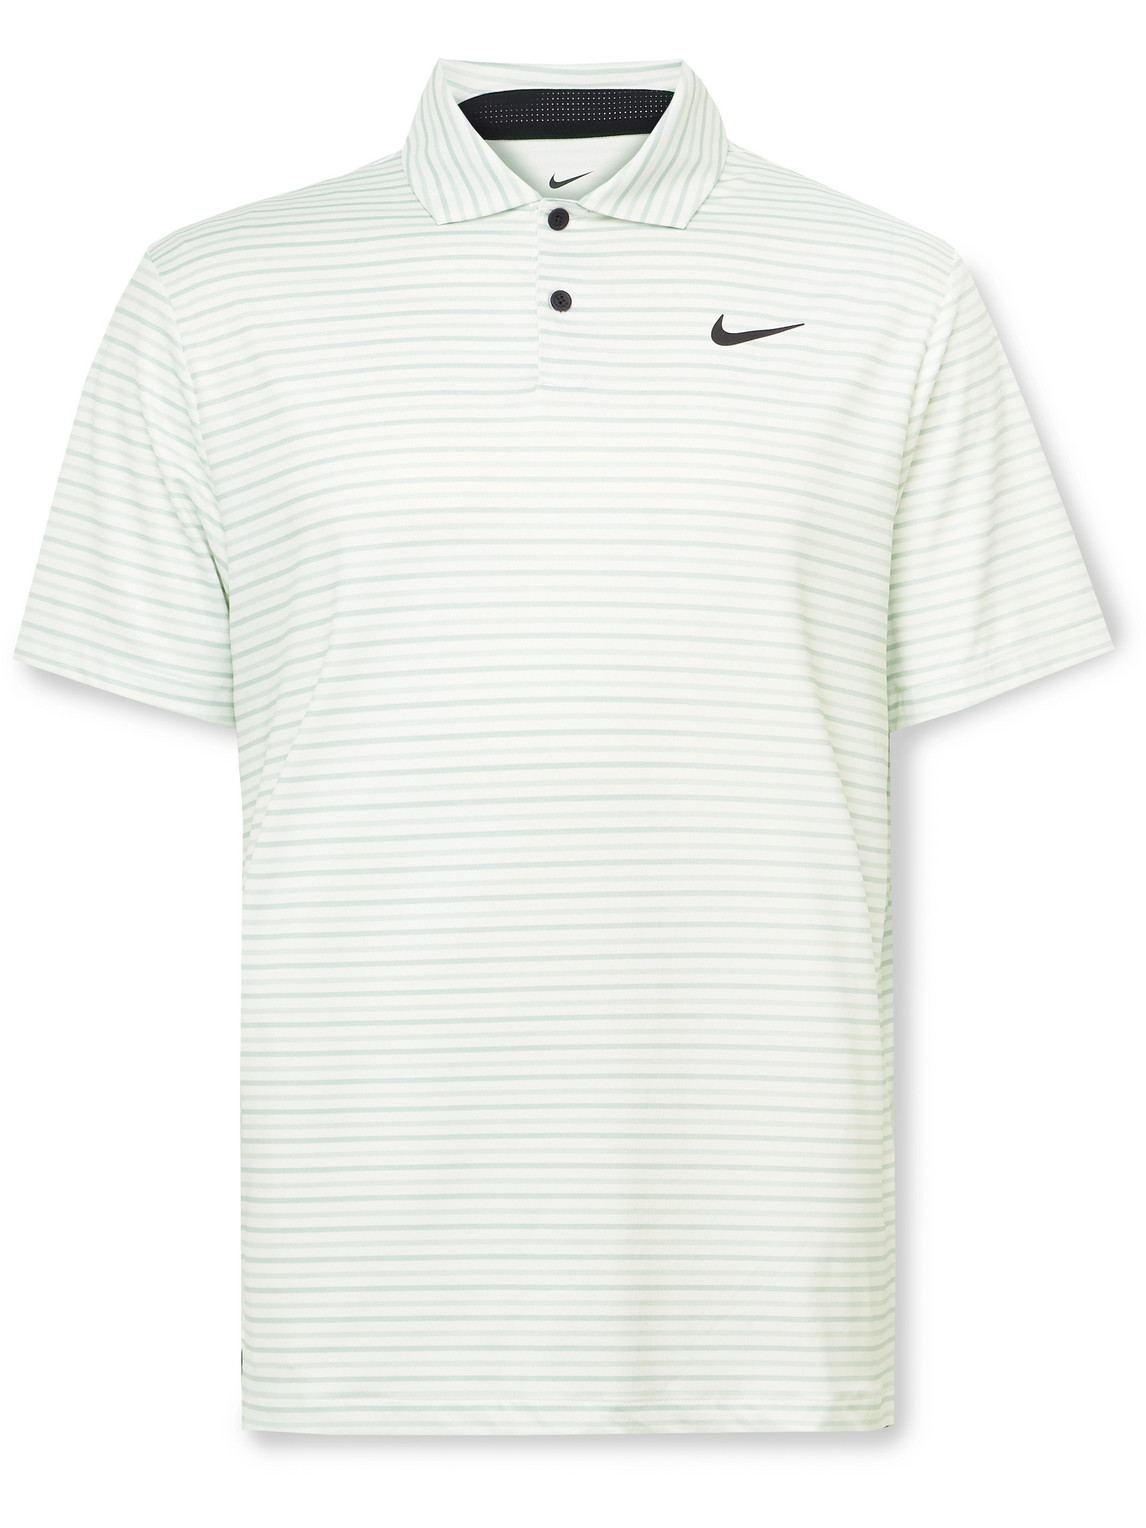 Nike Tour Striped Dri-fit Golf Polo Shirt In White